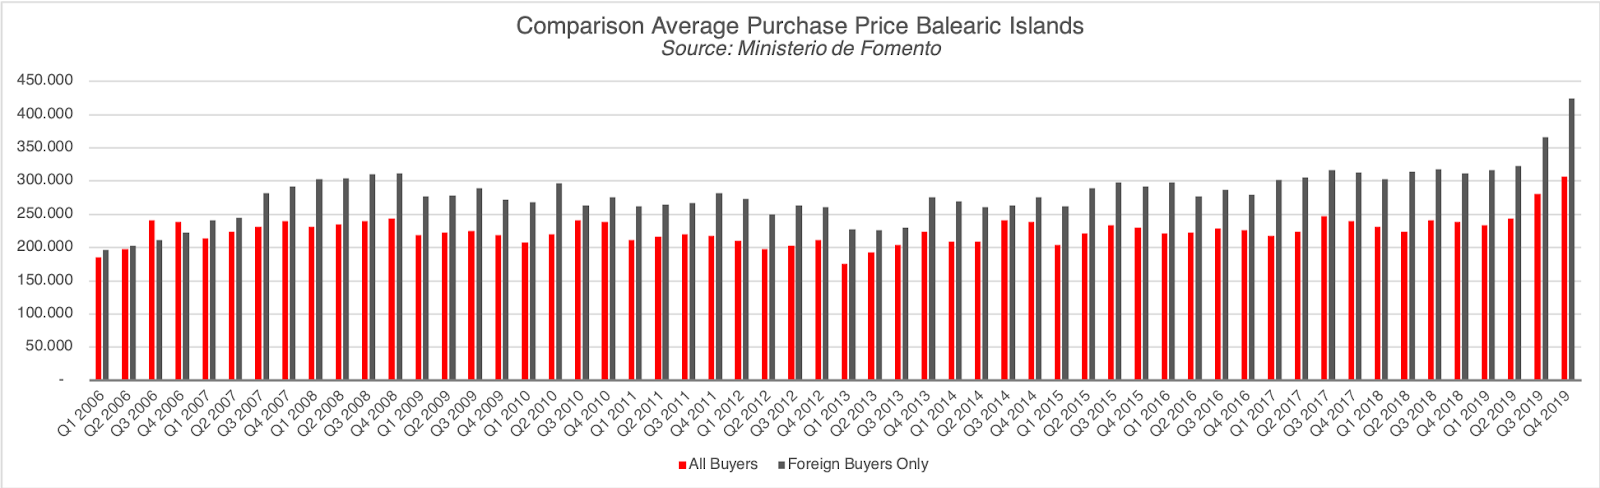 Comparison Average Purchase Price Balearic Islands